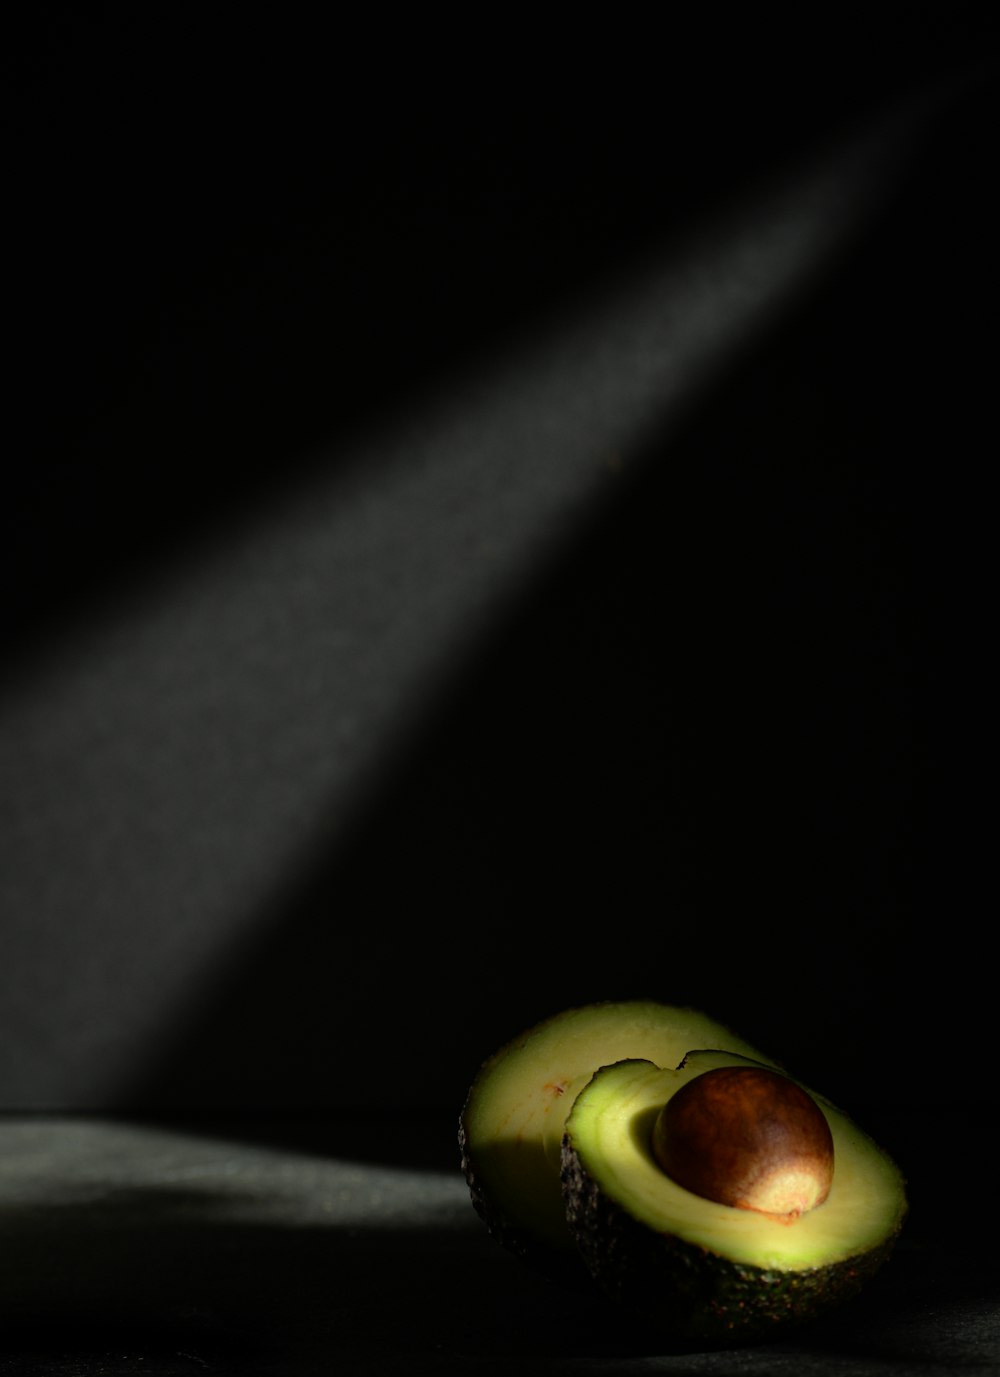 an avocado cut in half on a table